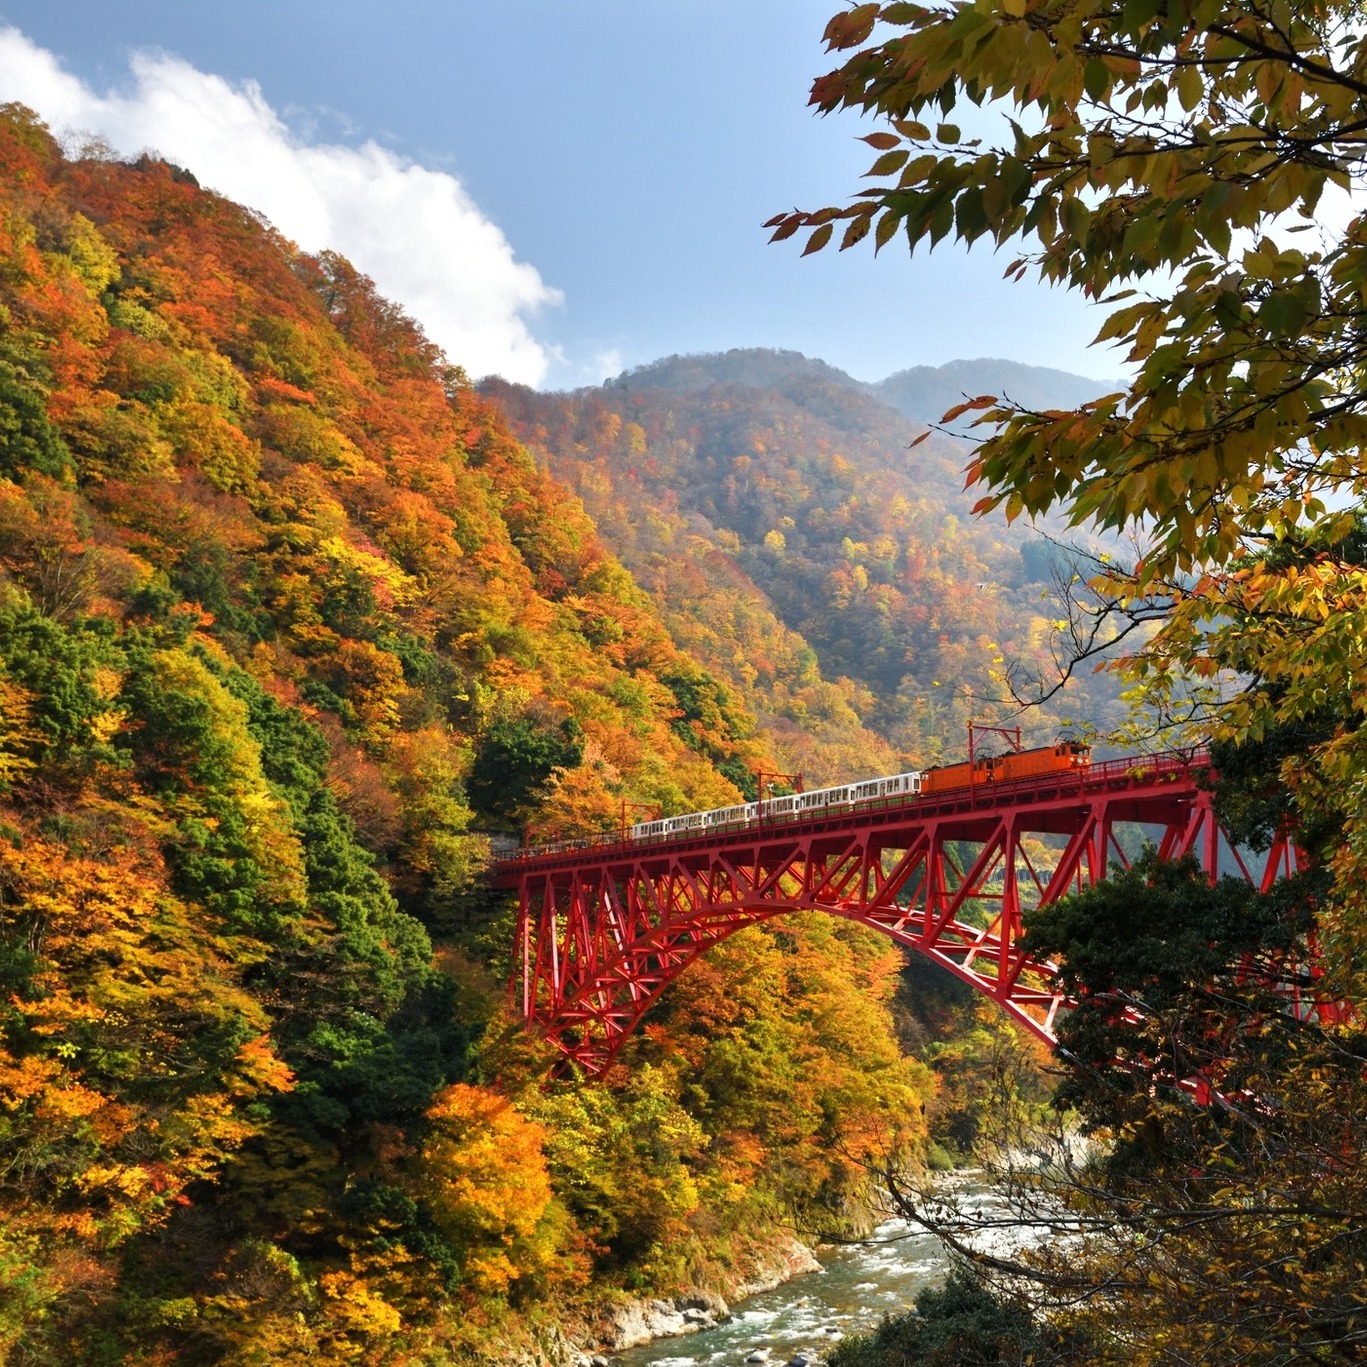 Scenic Train Rides in Asia - Kurobe Gorge Railway from afar during autumn season